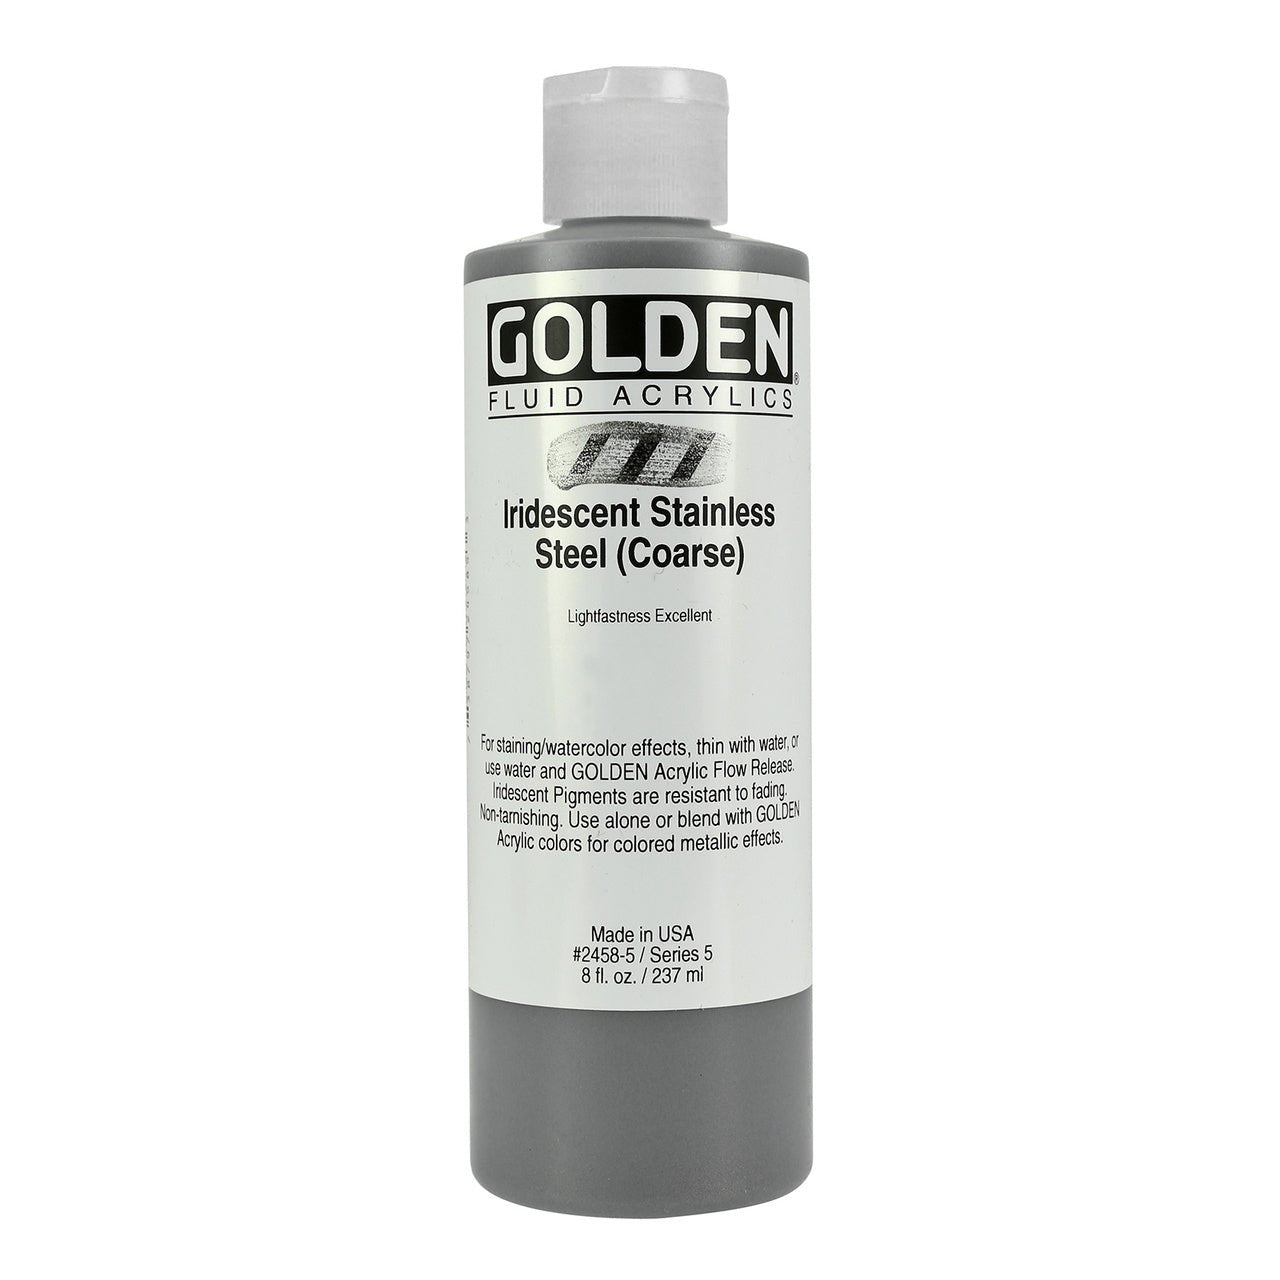 Golden Fluid Acrylic Iridescent Stainless Steel 8 oz - merriartist.com